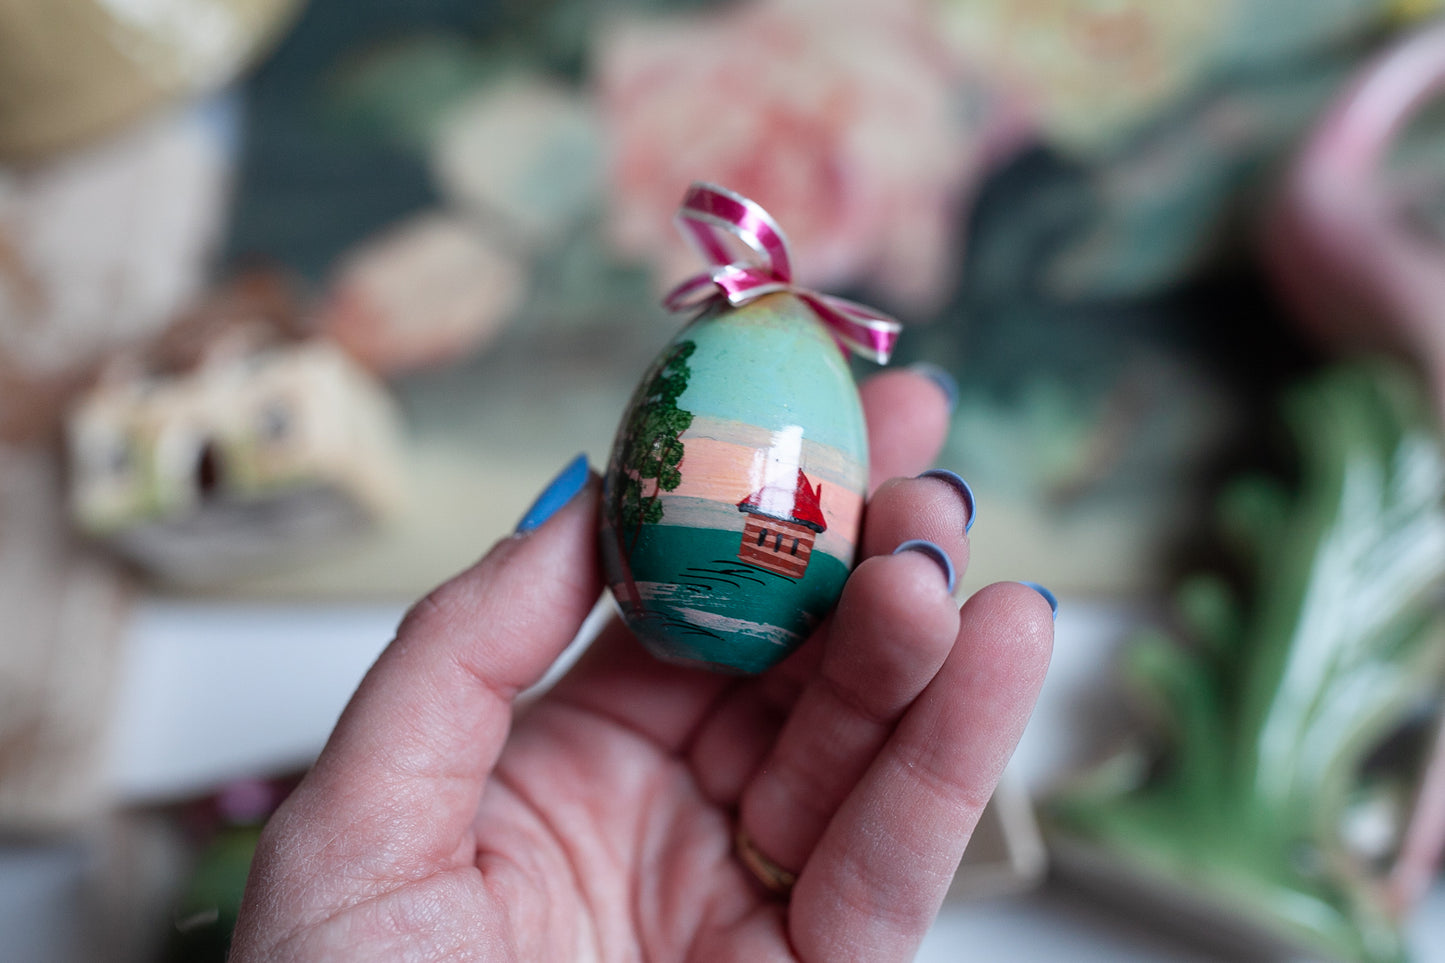 Vintage Hand Painted Eggs - Easter Egg Ornaments - Egg Ornaments